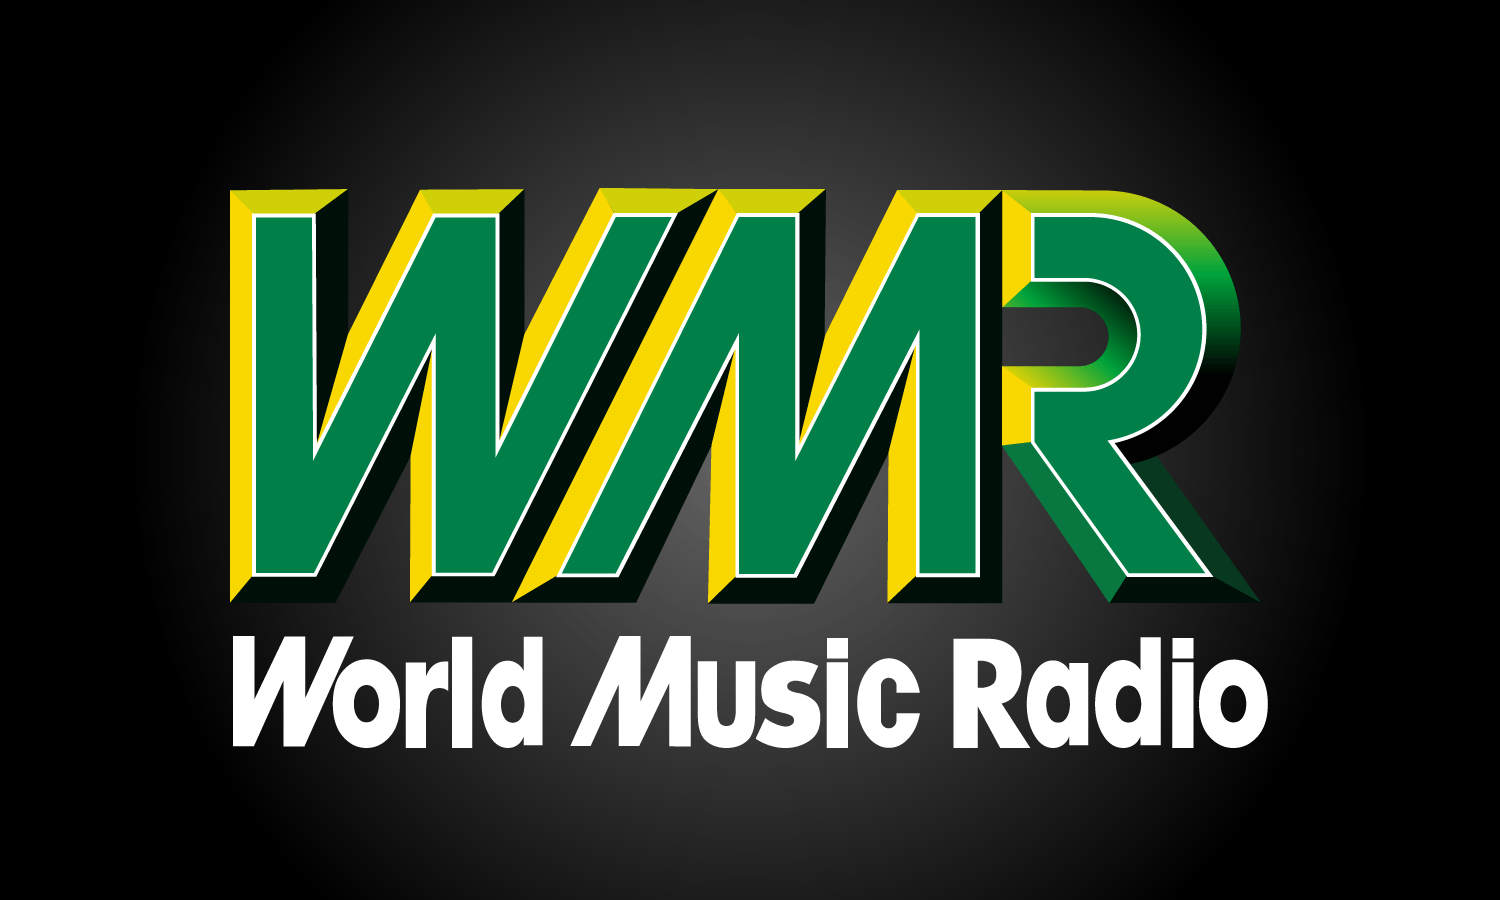 Green Music Radio Logo - WMR - World Music Radio